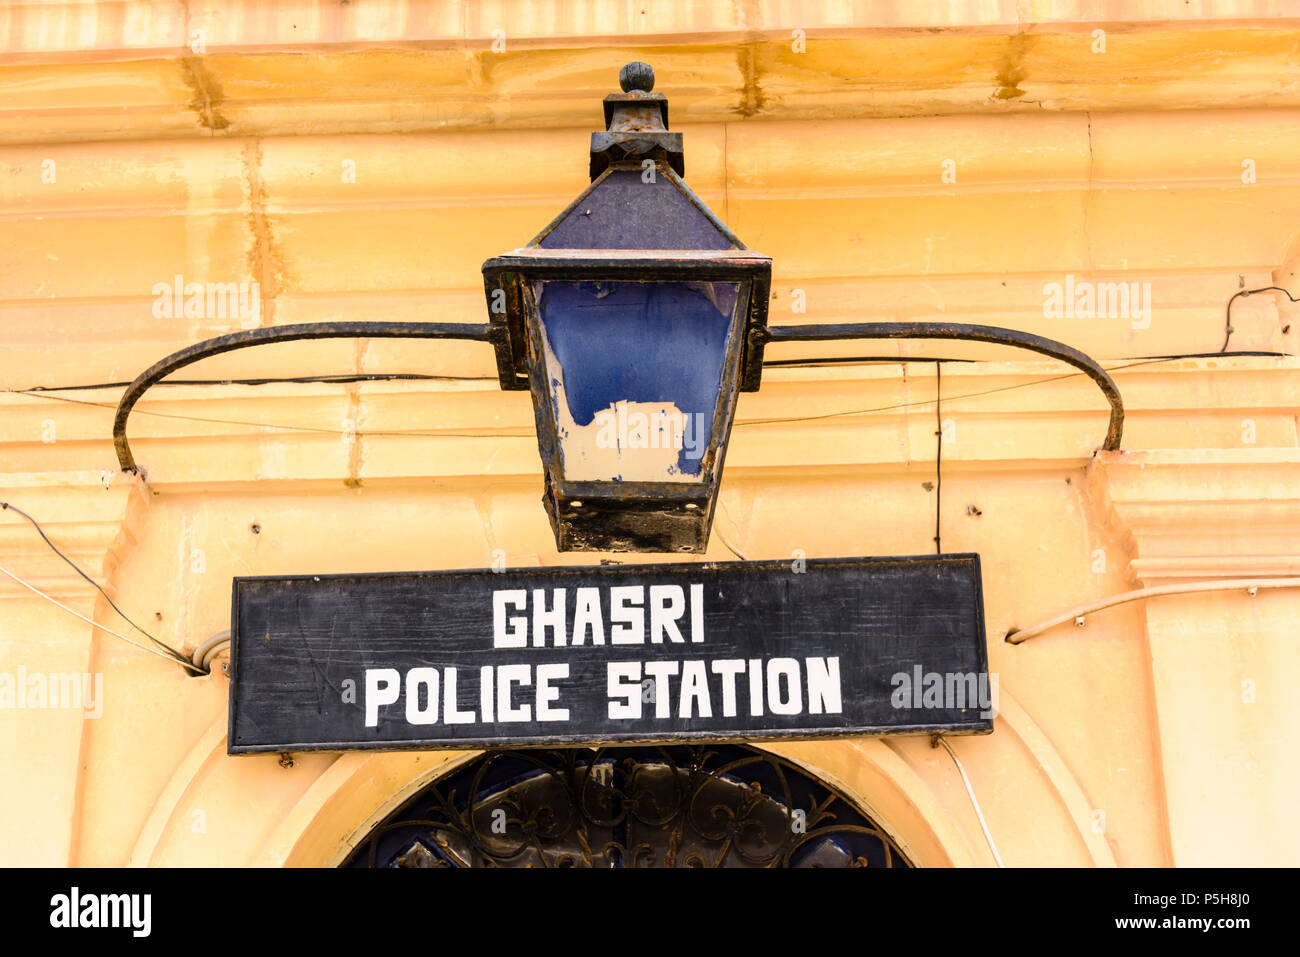 Gasri police station, Gozo, Malta. Stock Photo